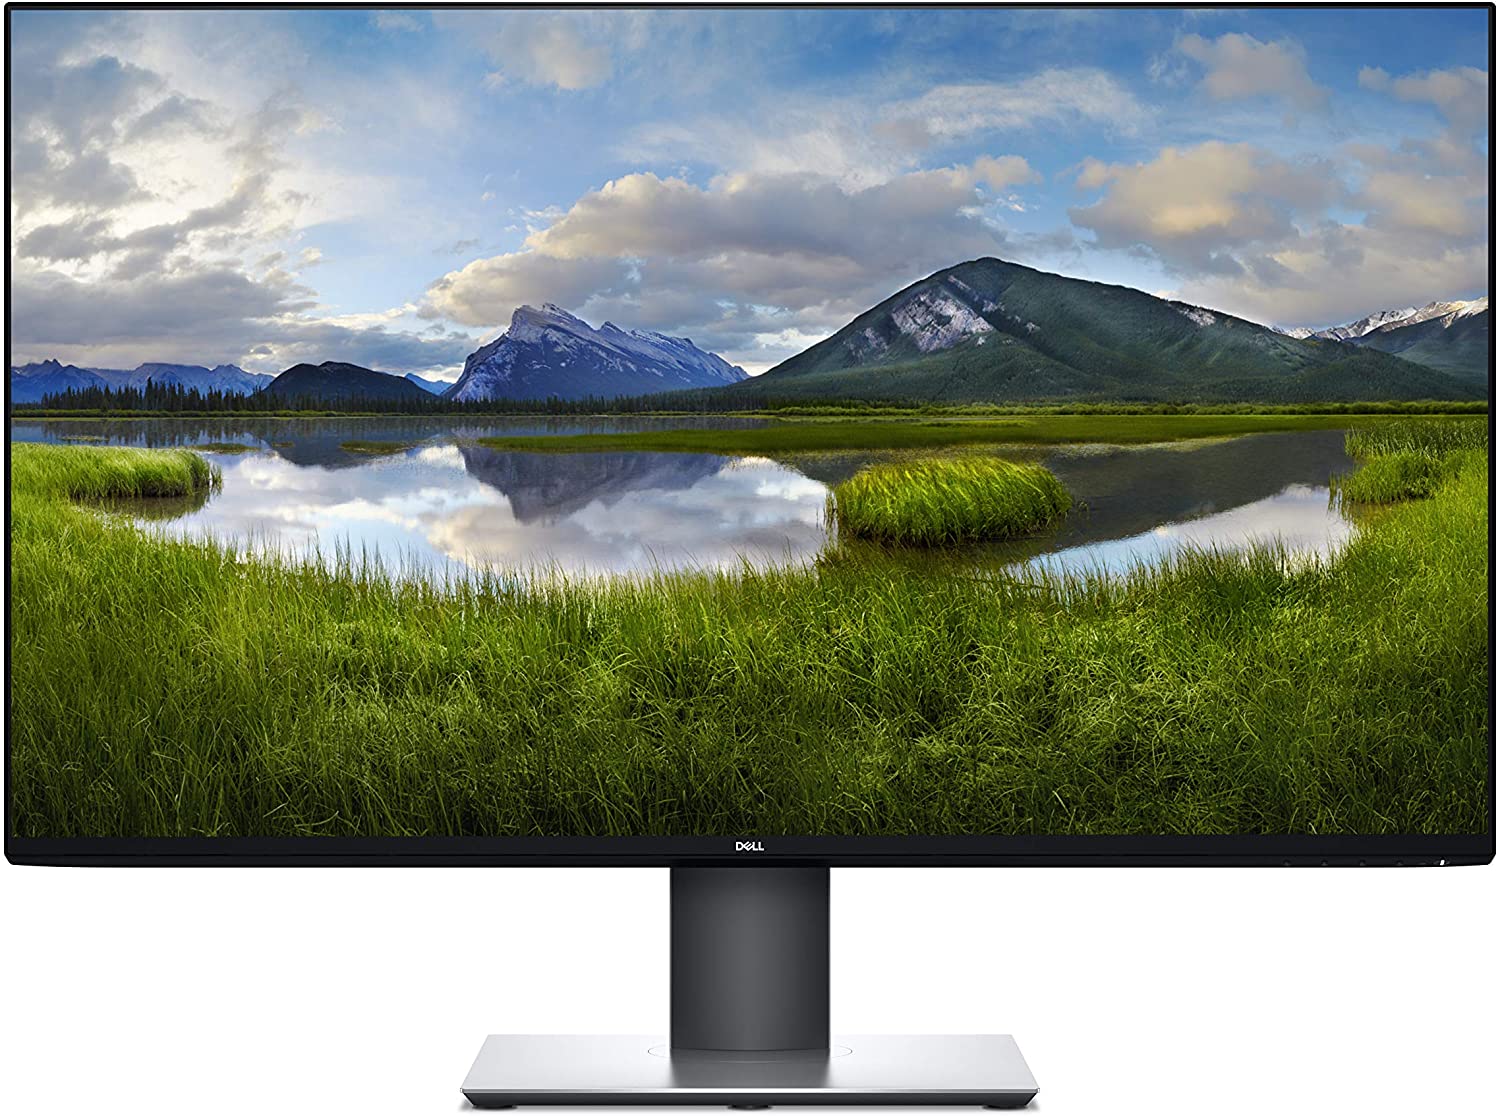 Dell UltraSharp U2419H (Best 4K Monitors For Photo Editing)